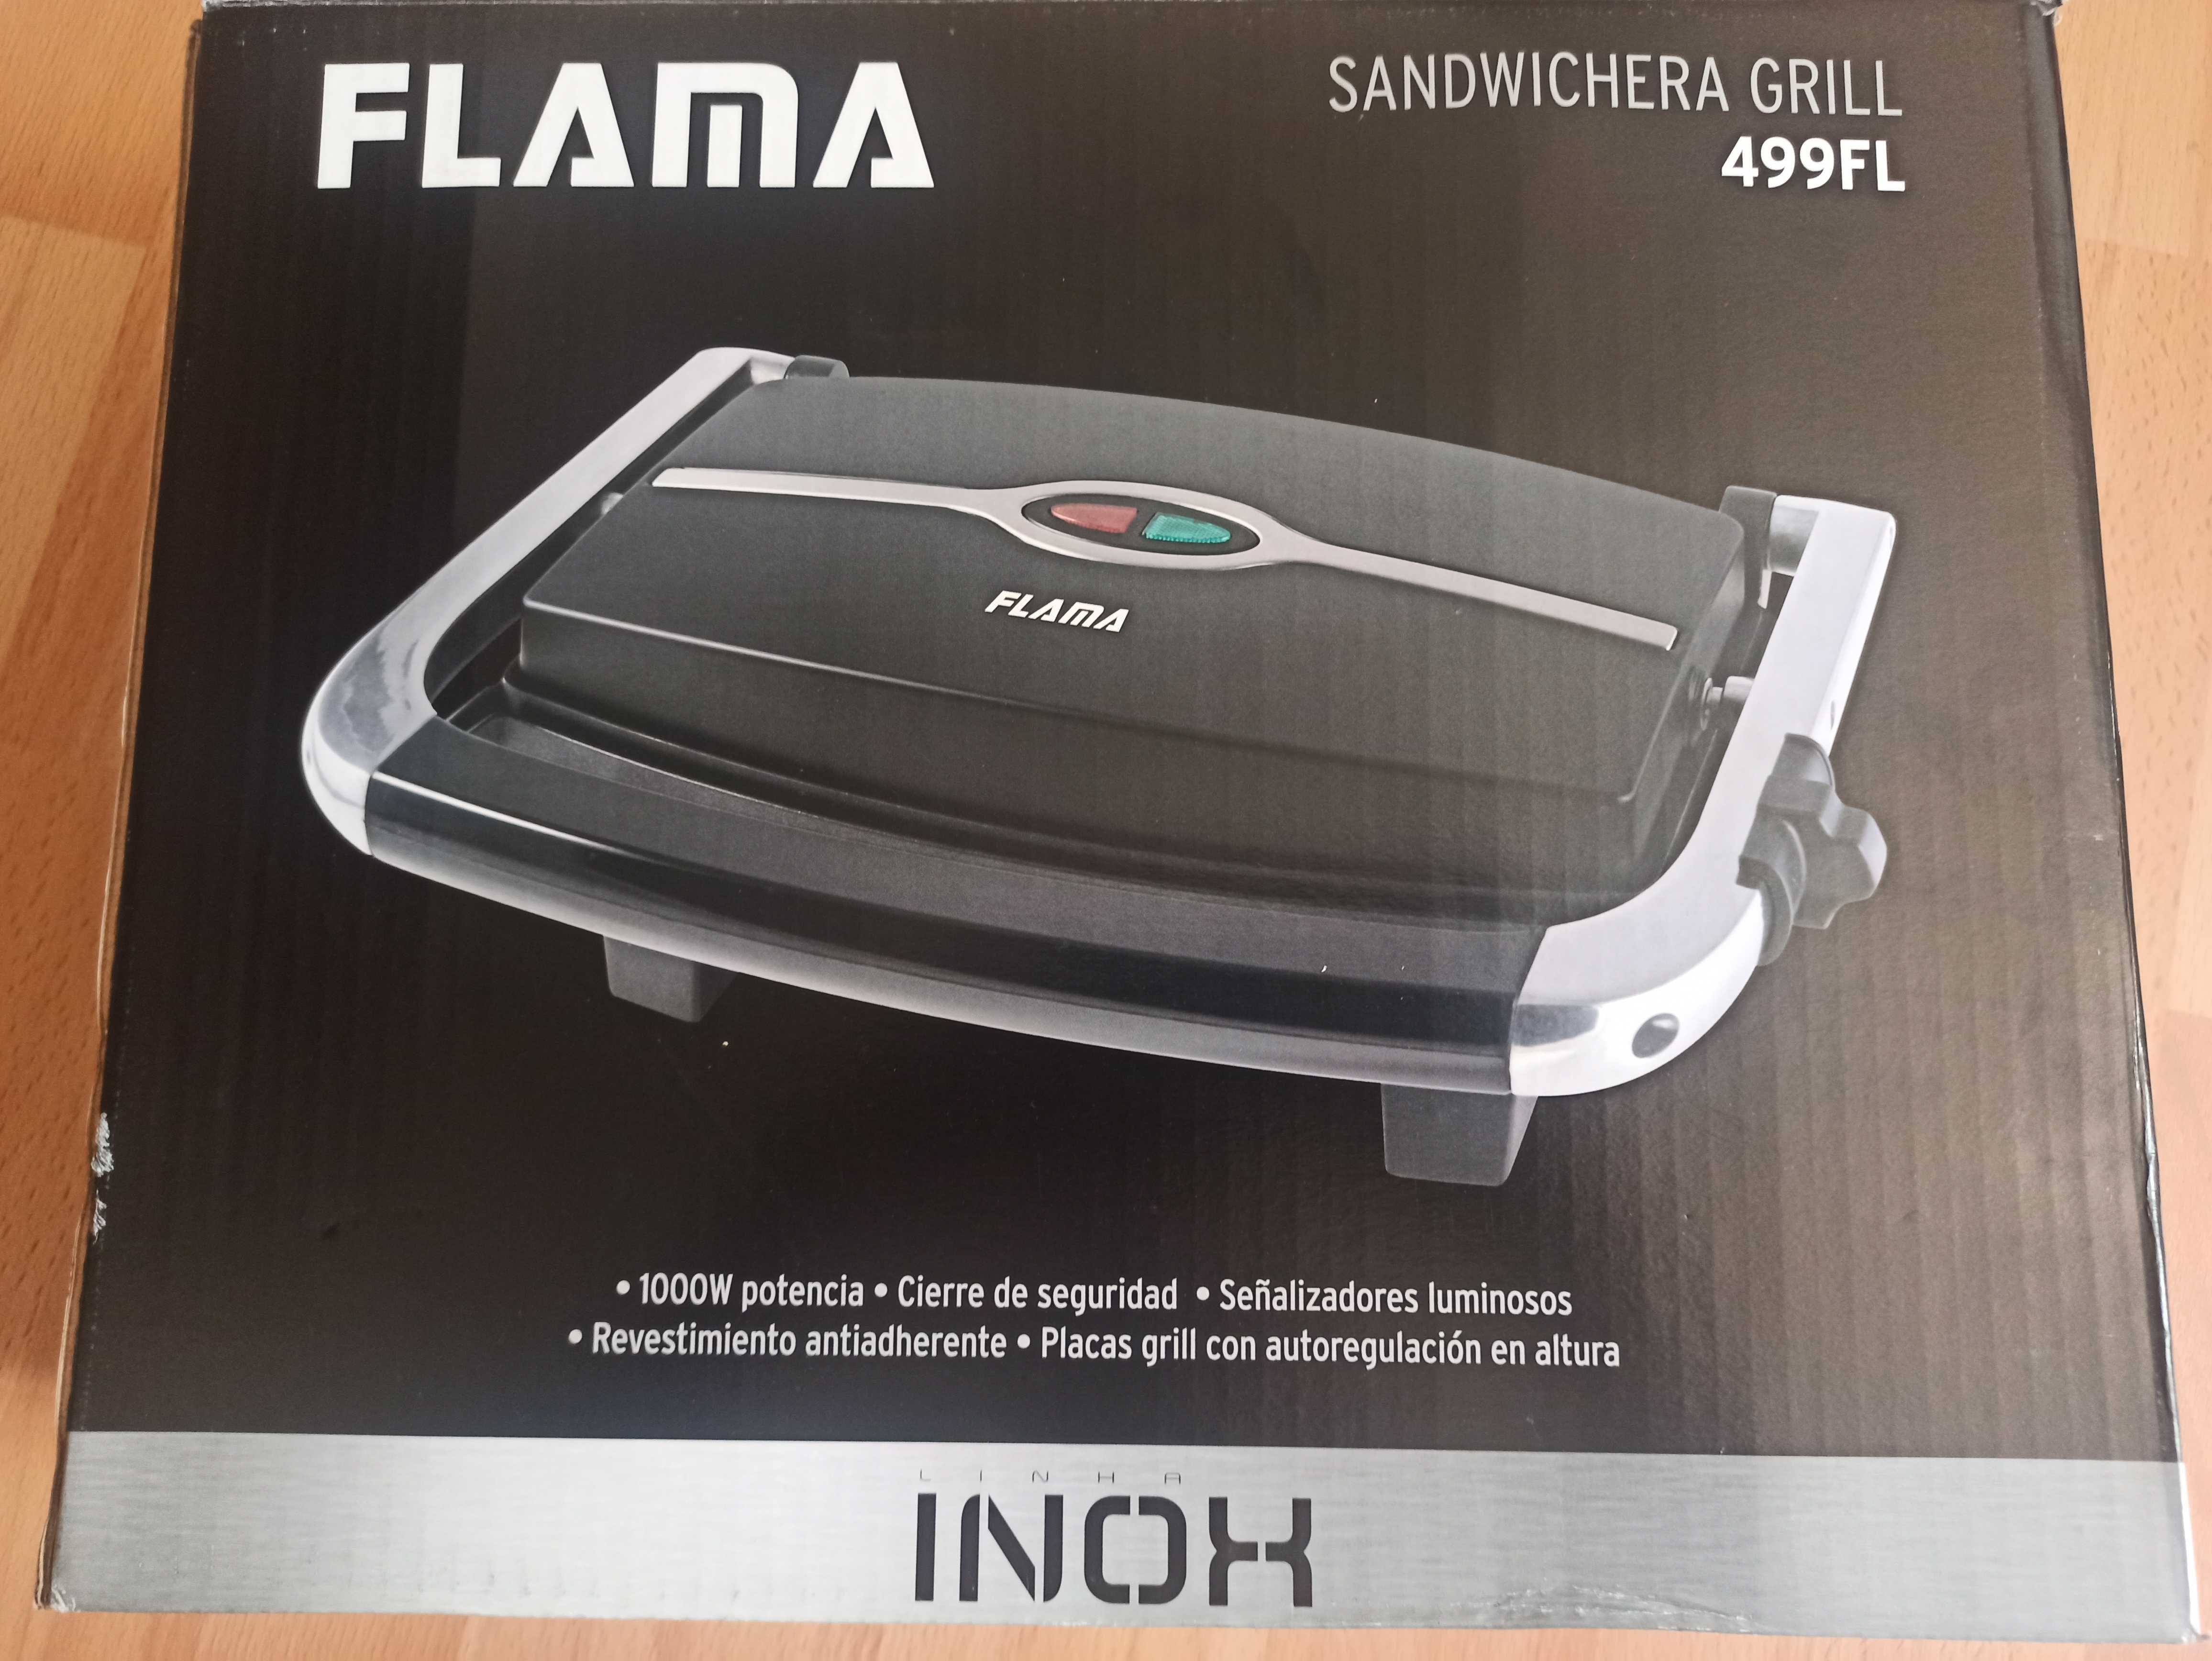 Sanduicheira Grill 499FL, Flama linha Inox